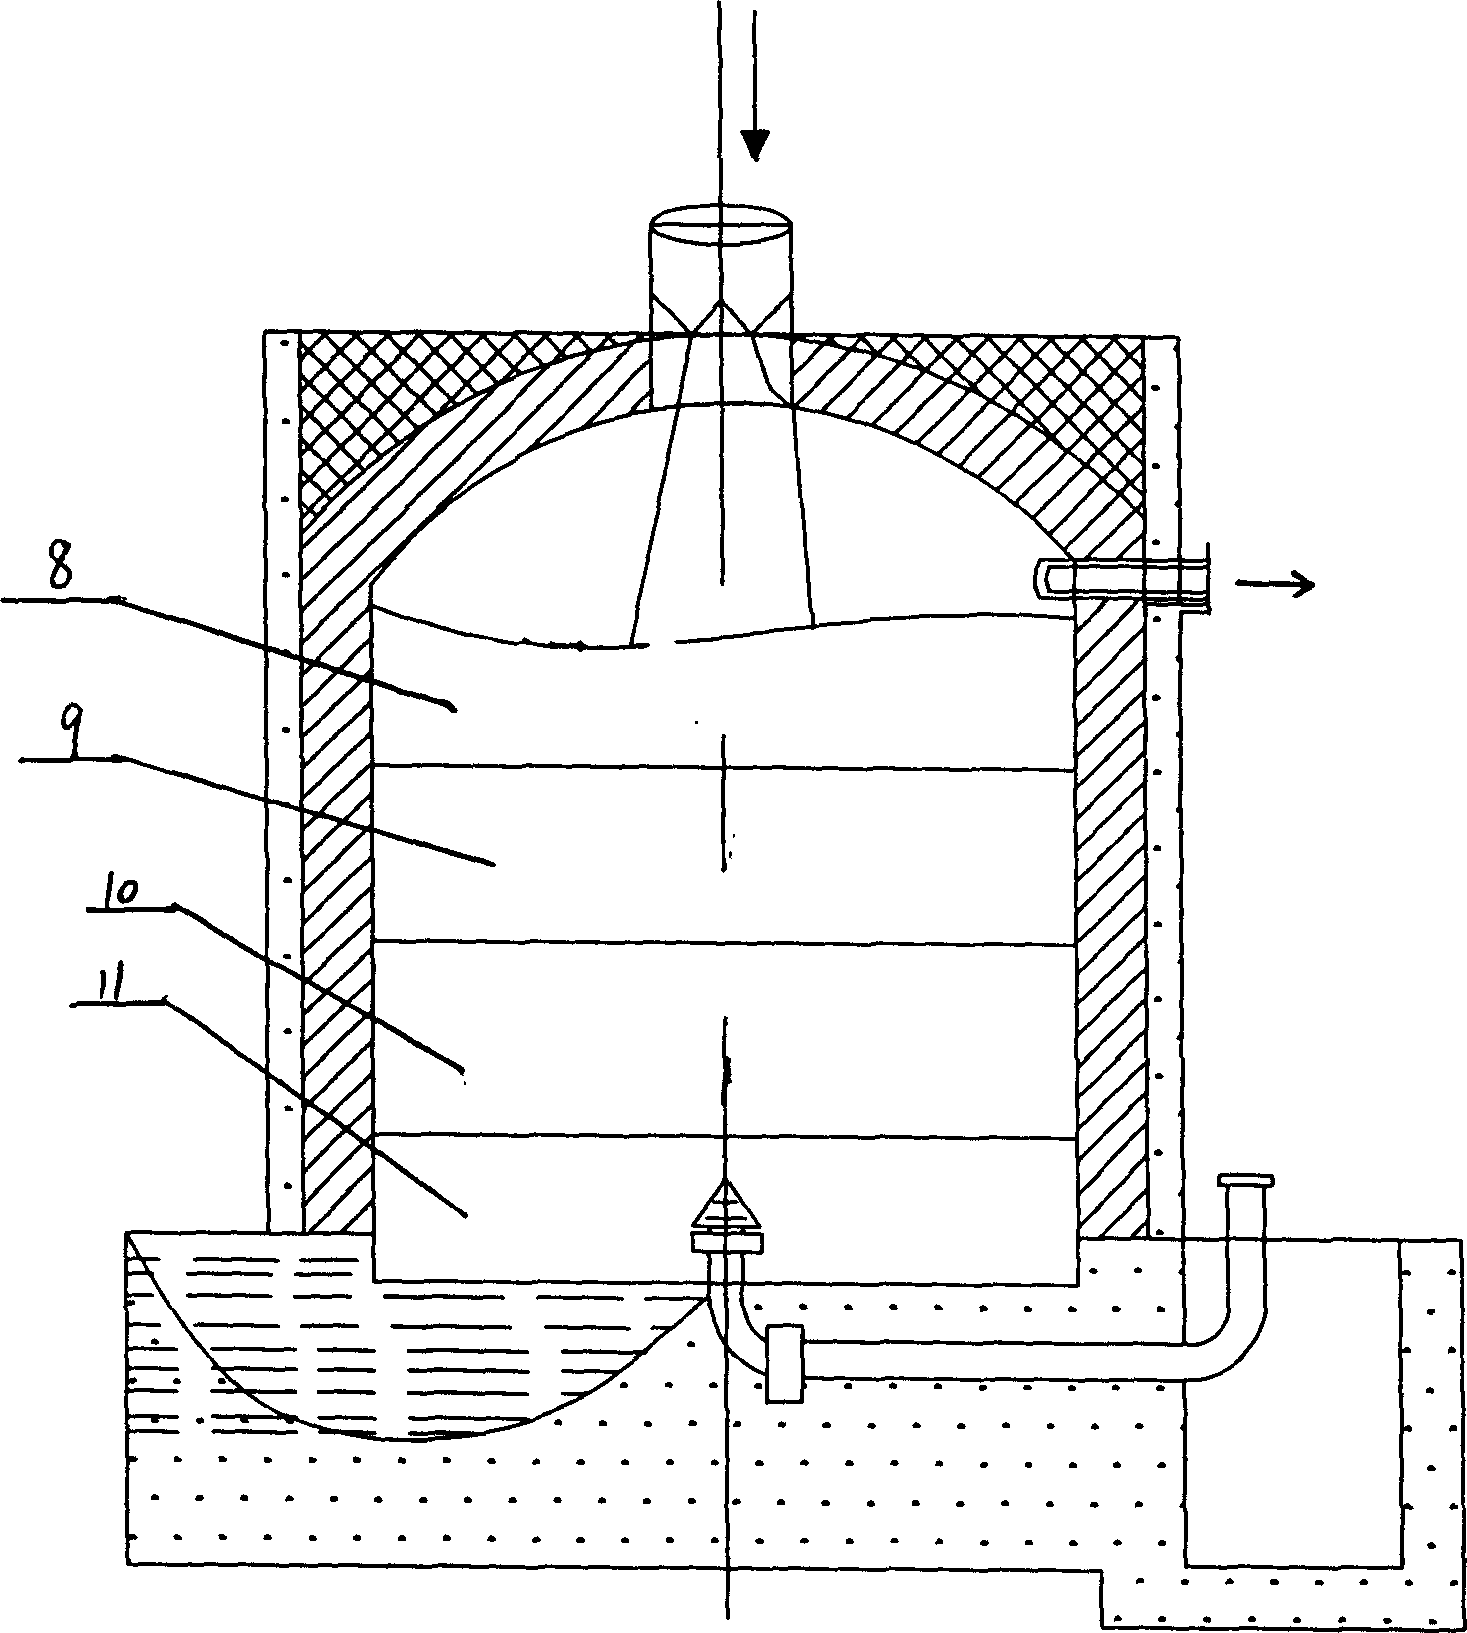 Calcining method for belt sintering machine